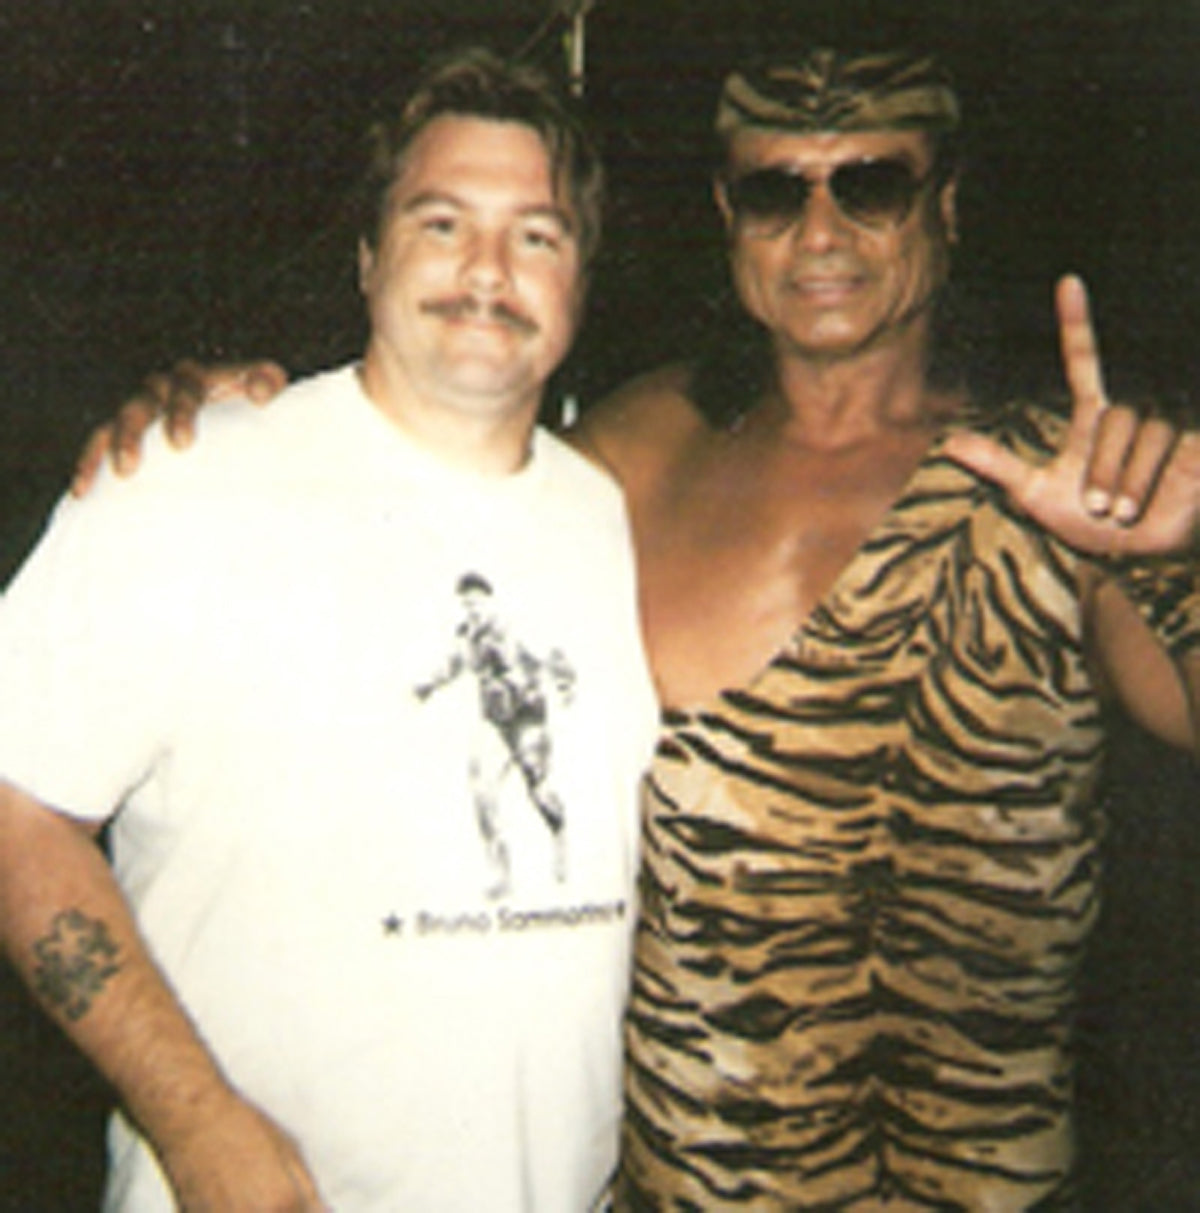 AM362 Tony Atlas Mil Mascaras Jimmy Snuka ( Deceased )  Autographed vintage Wrestling Magazine w/COA